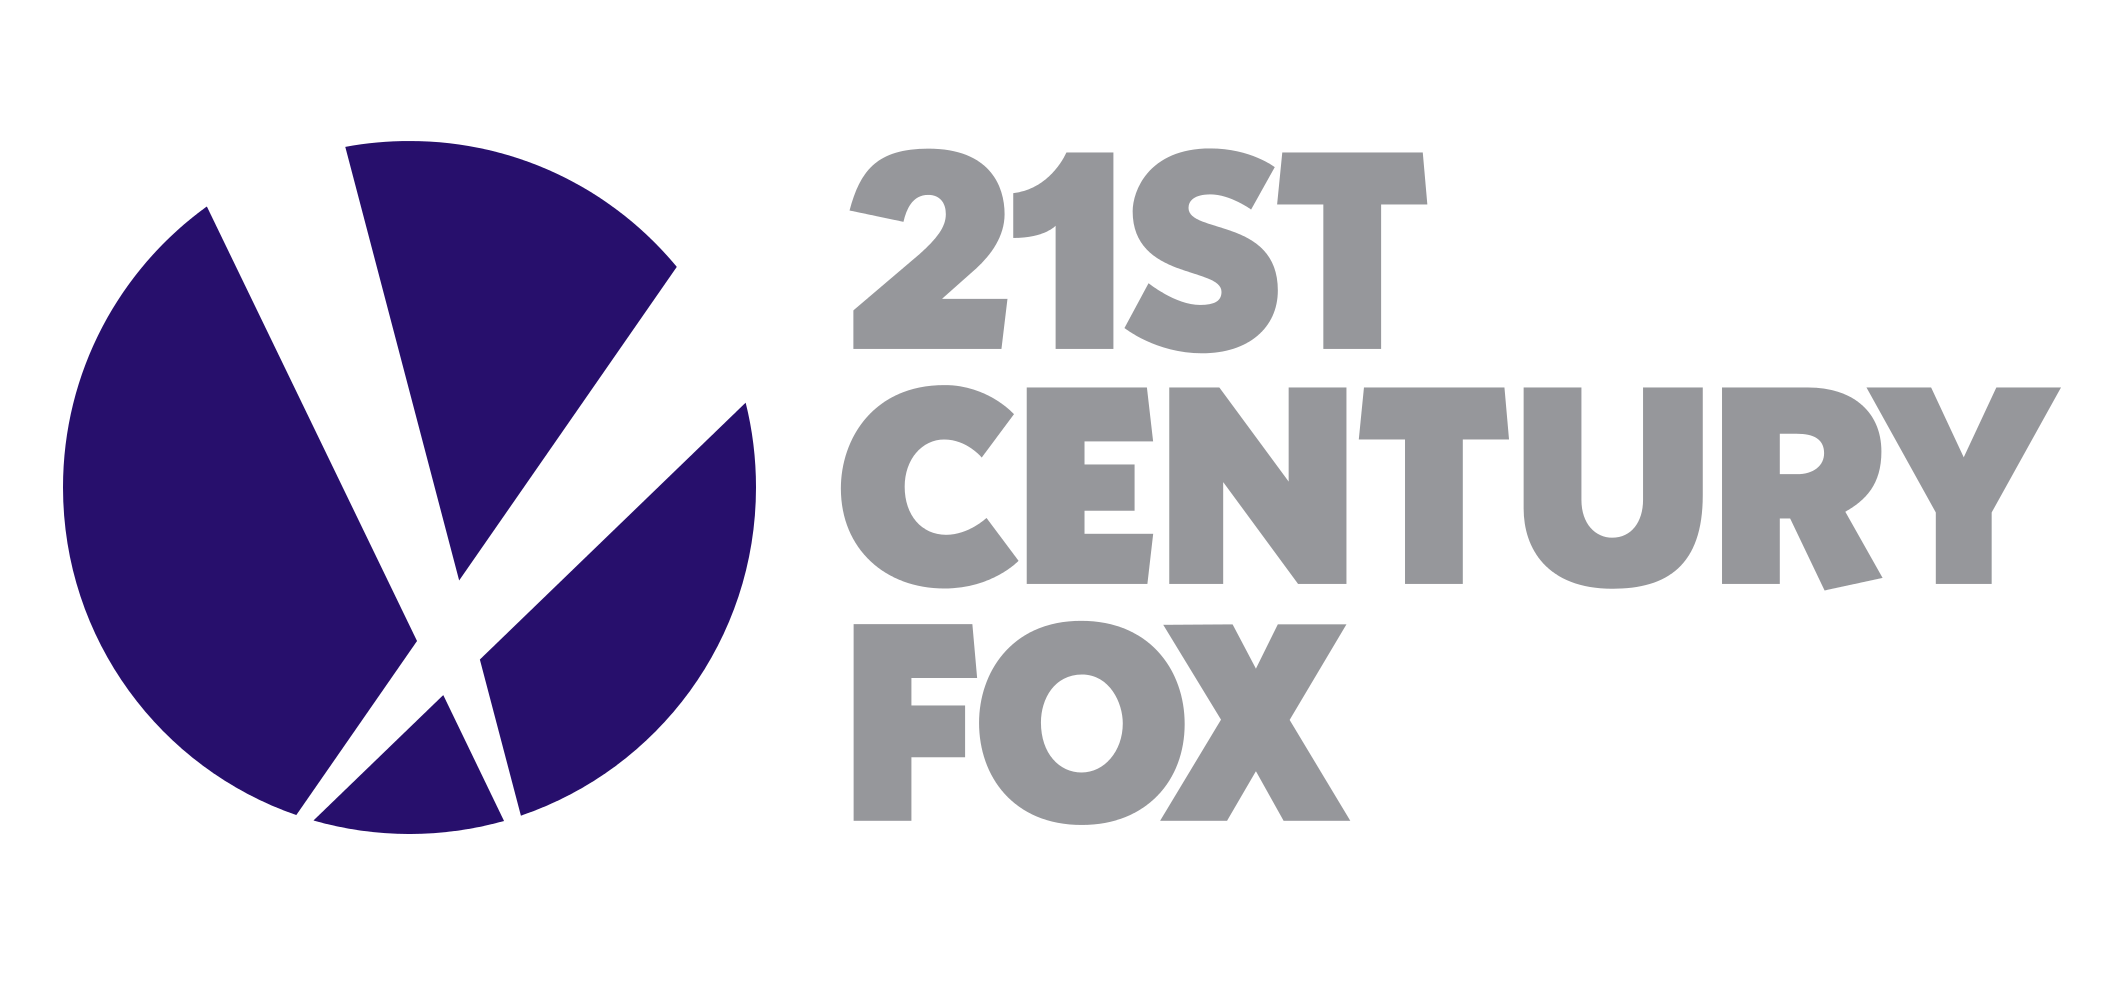 21st century fox.png